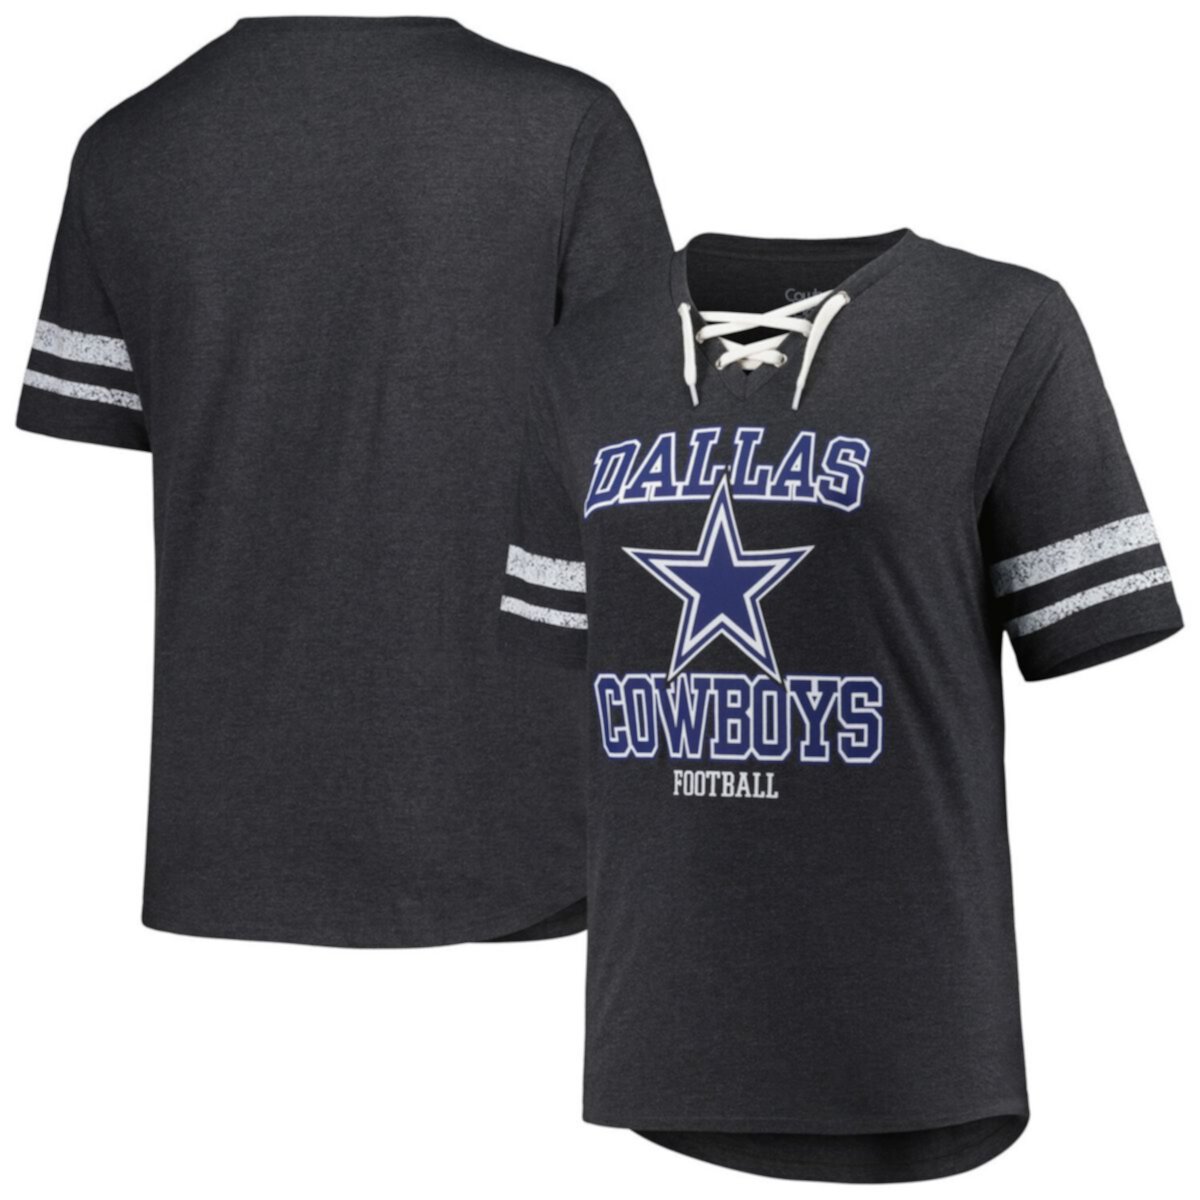 Women's Fanatics Branded Heather Charcoal Dallas Cowboys Plus Size Lace-Up V-Neck T-Shirt Fanatics